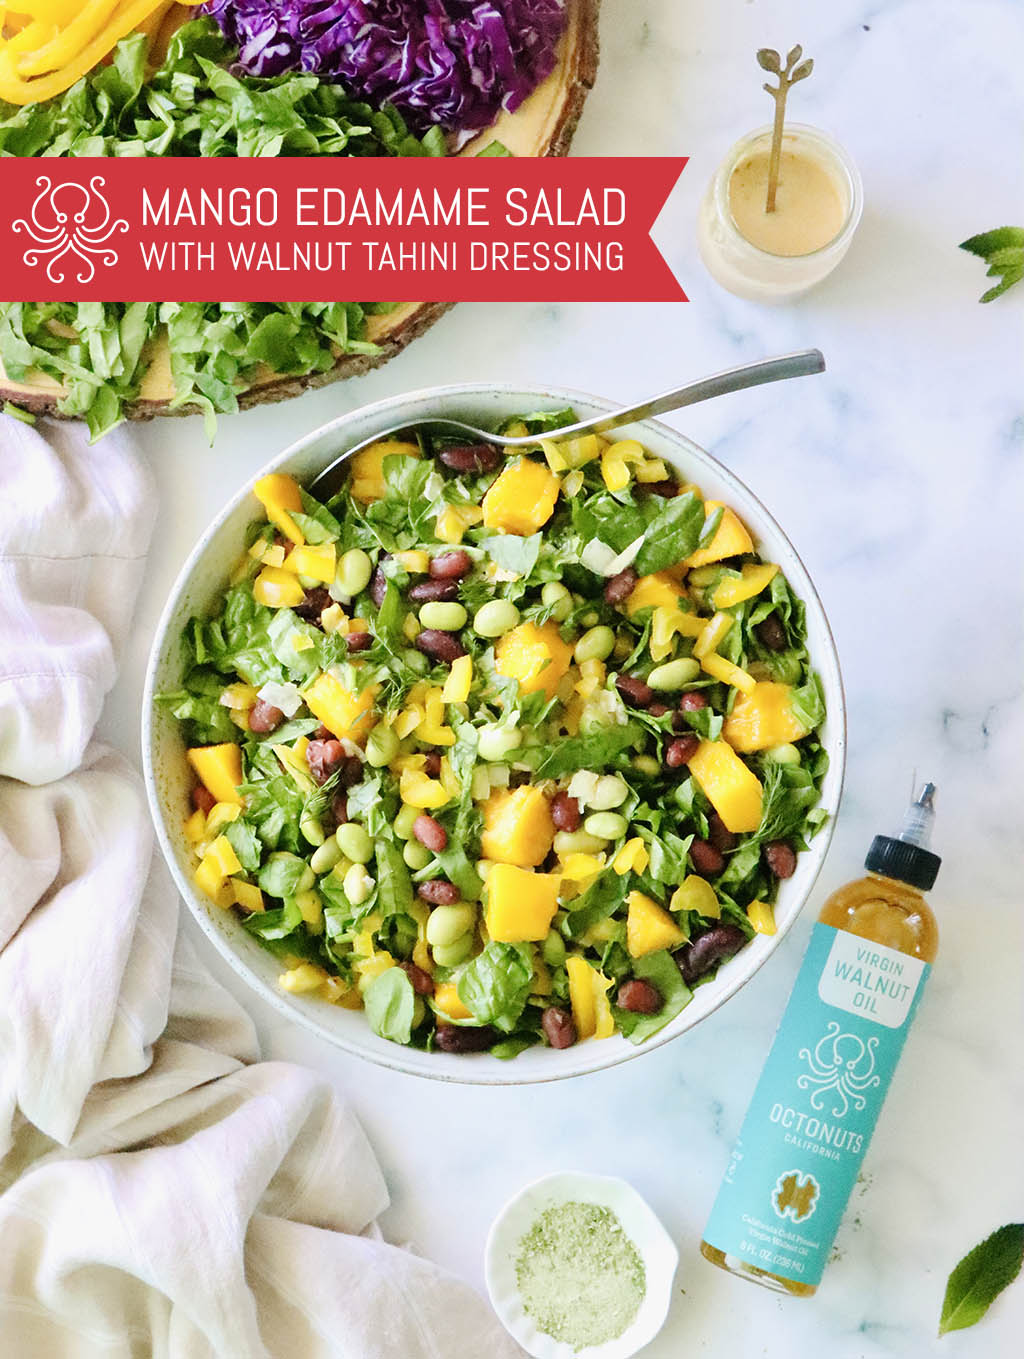 Mango Edamame Salad with Octonuts Walnut Oil Tahini Dill Dressing